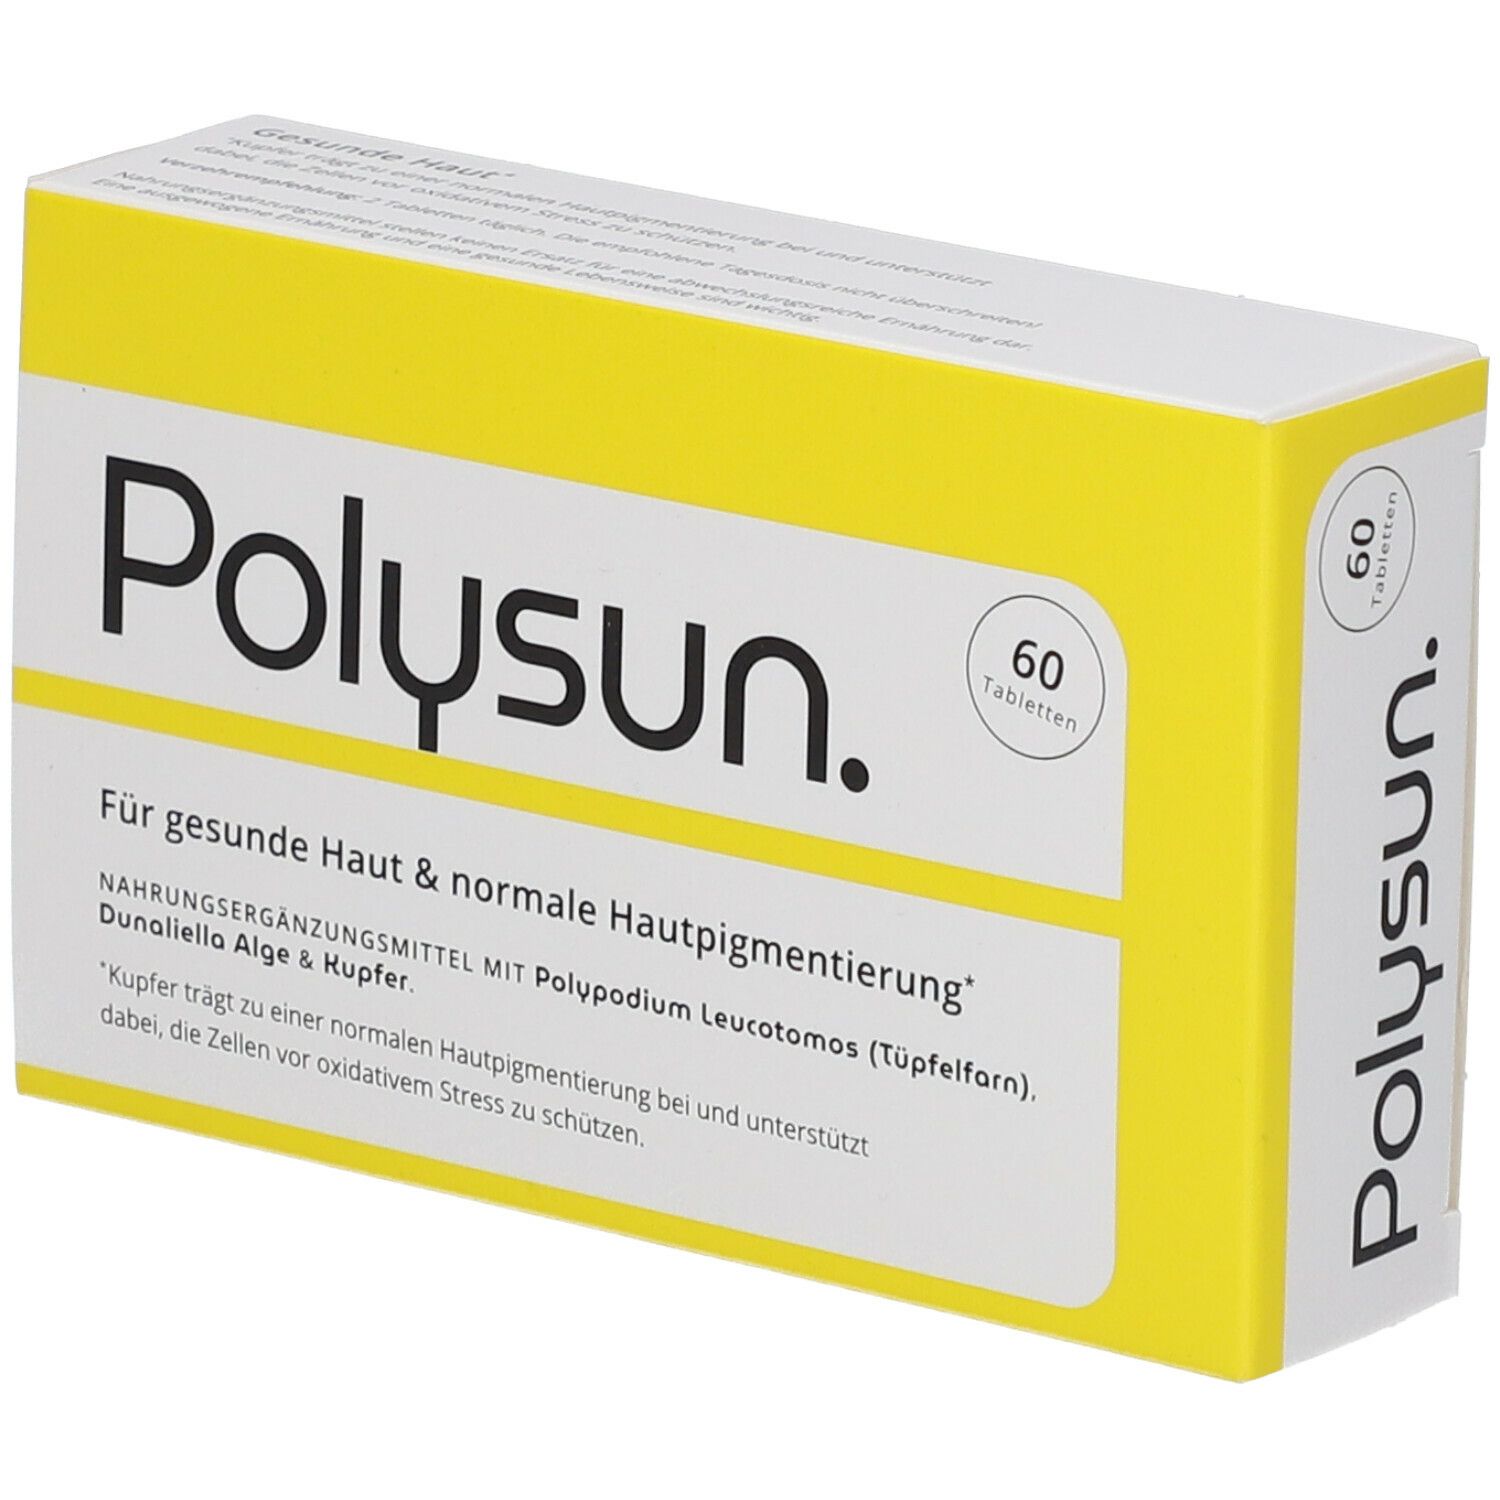 Image of Polysun Tabletten